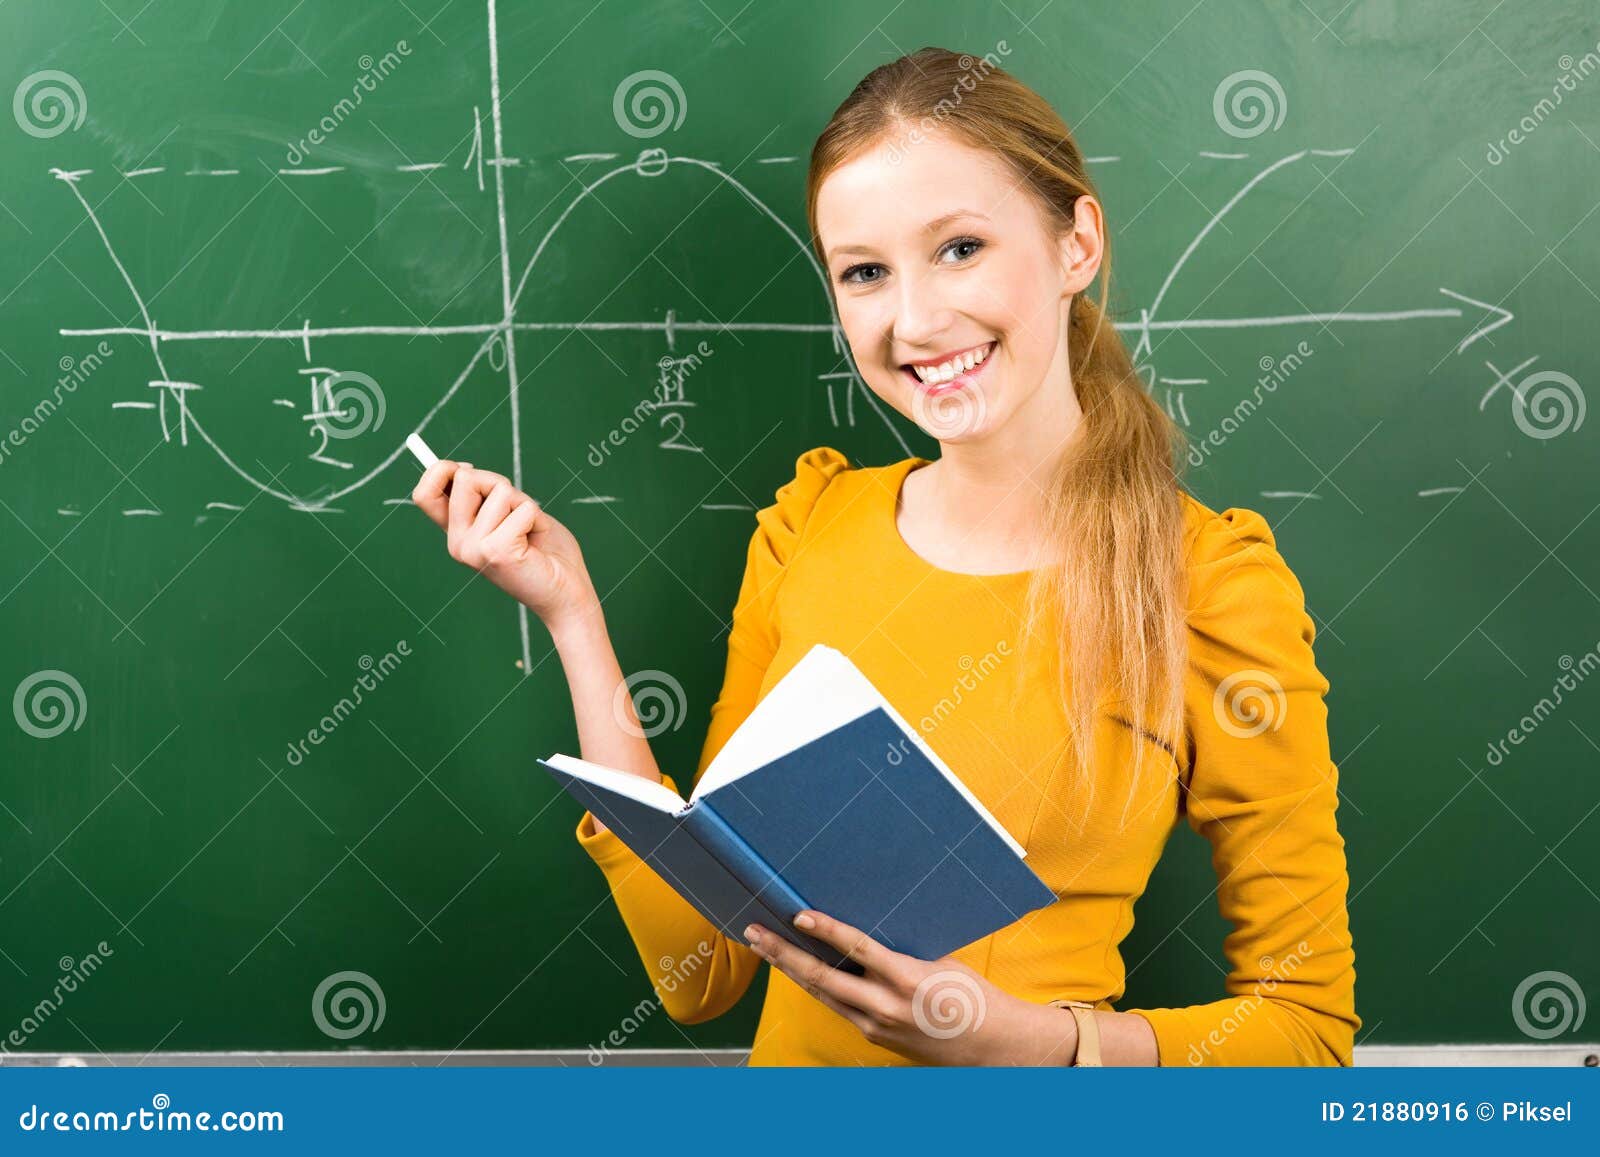 girl doing math chalkboard 21880916